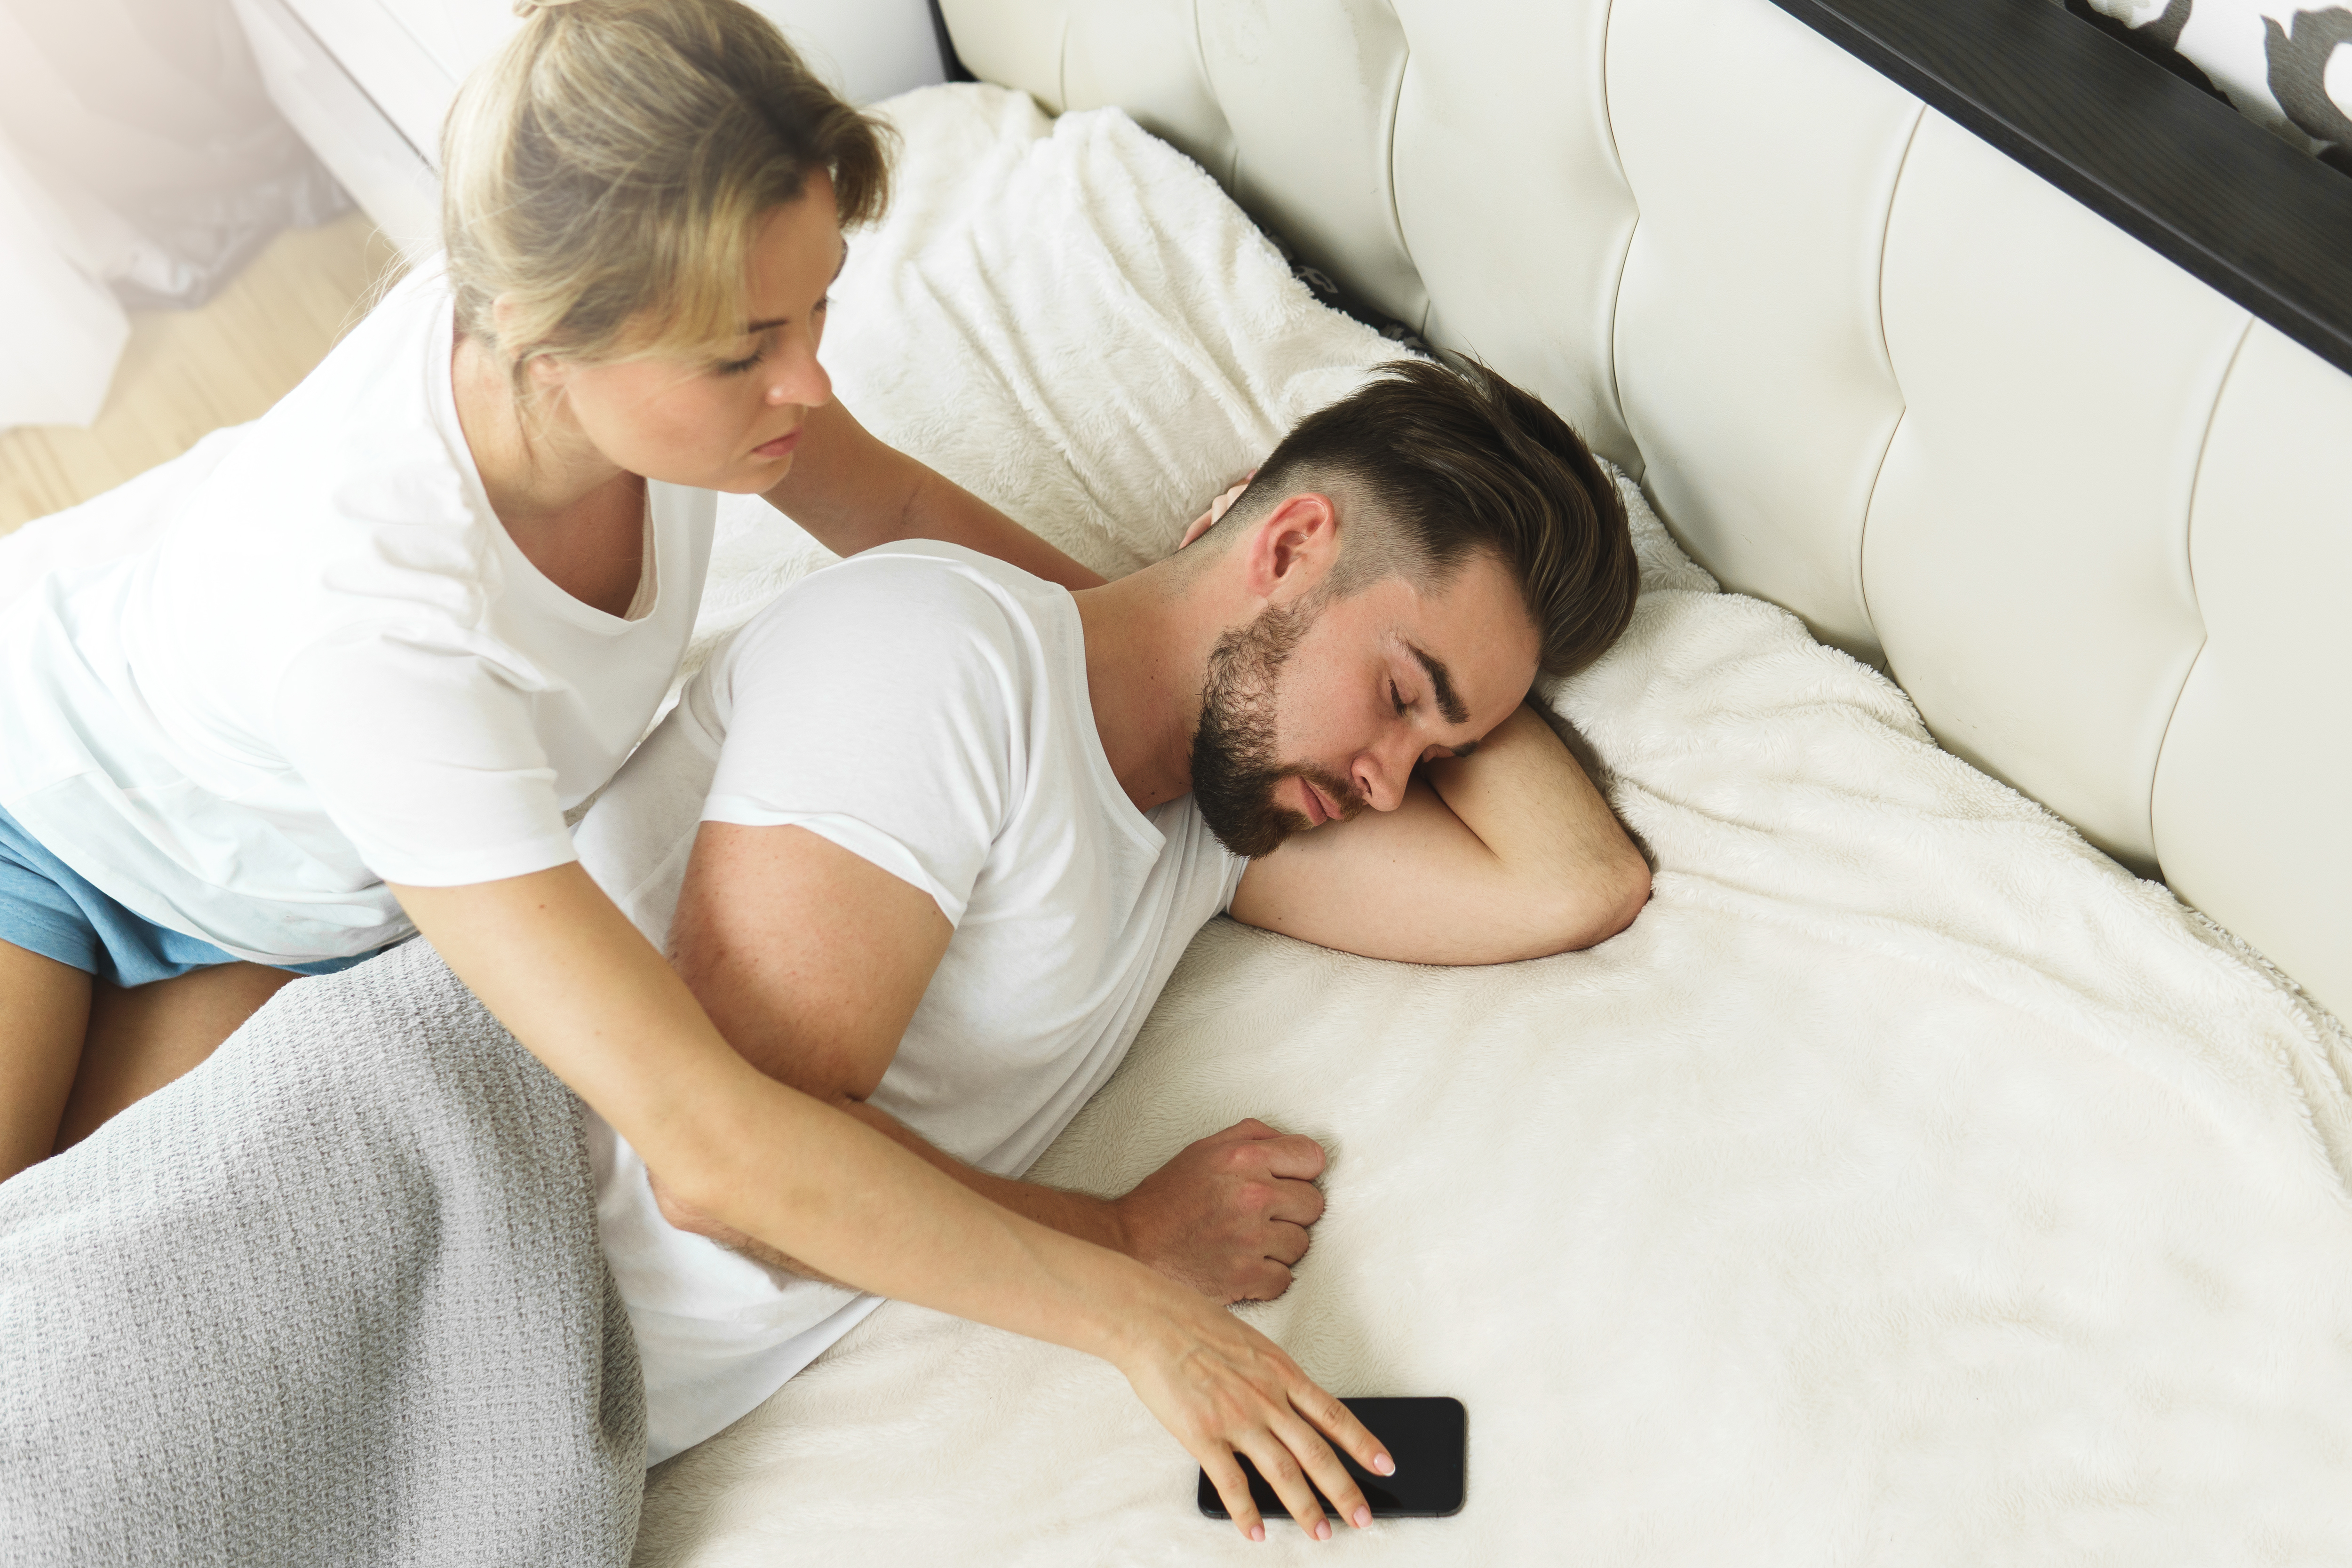 A woman secretly taking her partner's phone  | Source: Shutterstock